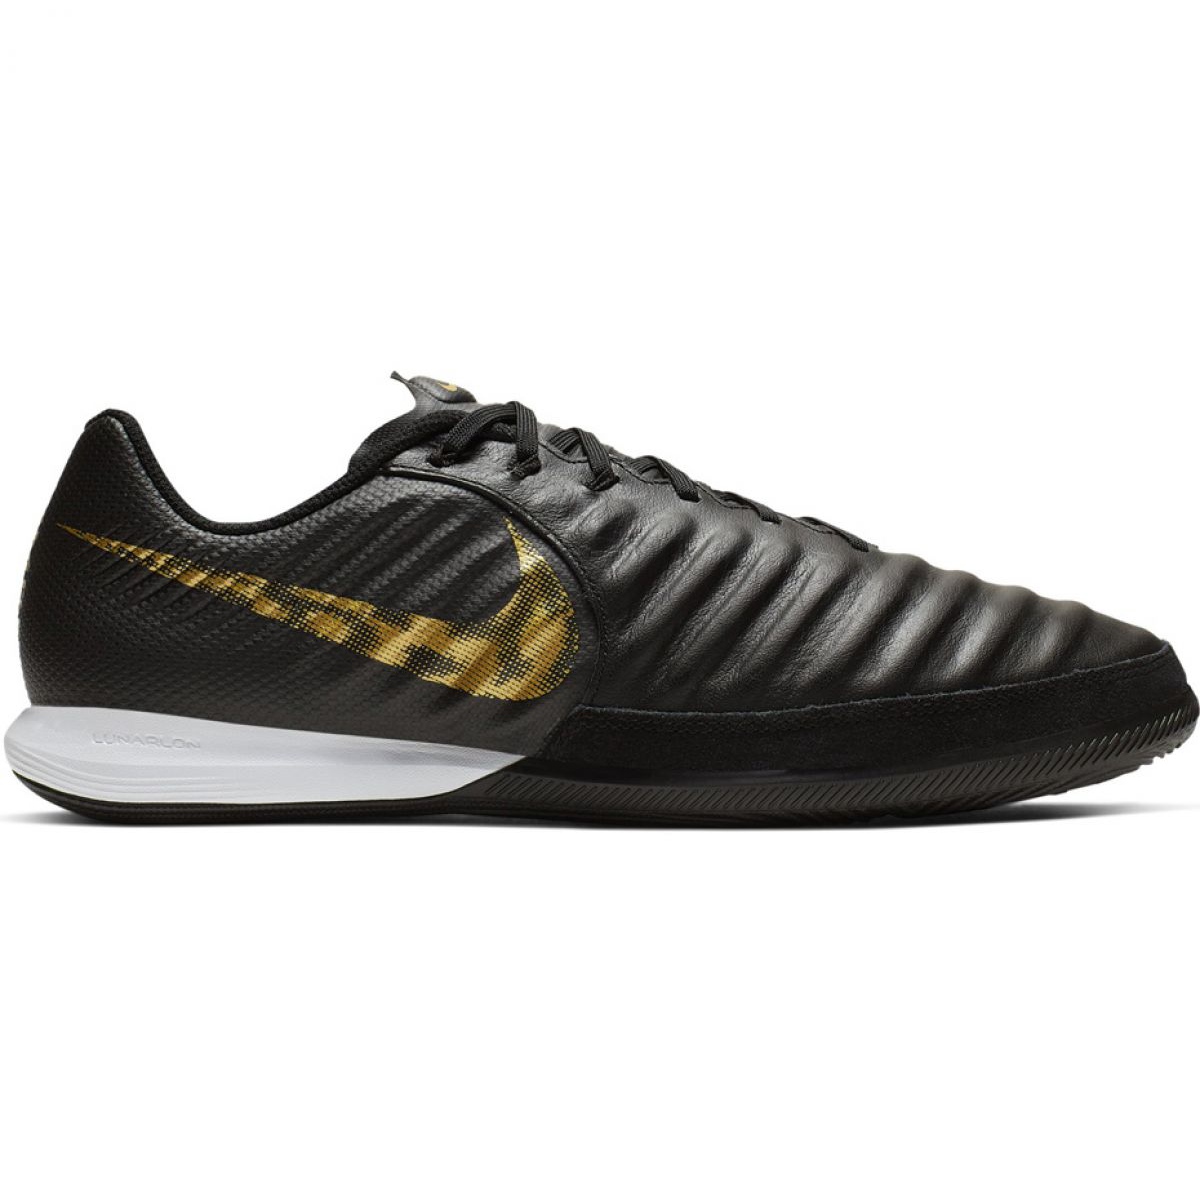 Indoor shoes Nike Tiempo Lunar Legend 7 Pro Ic M AH7246-077 black black ...